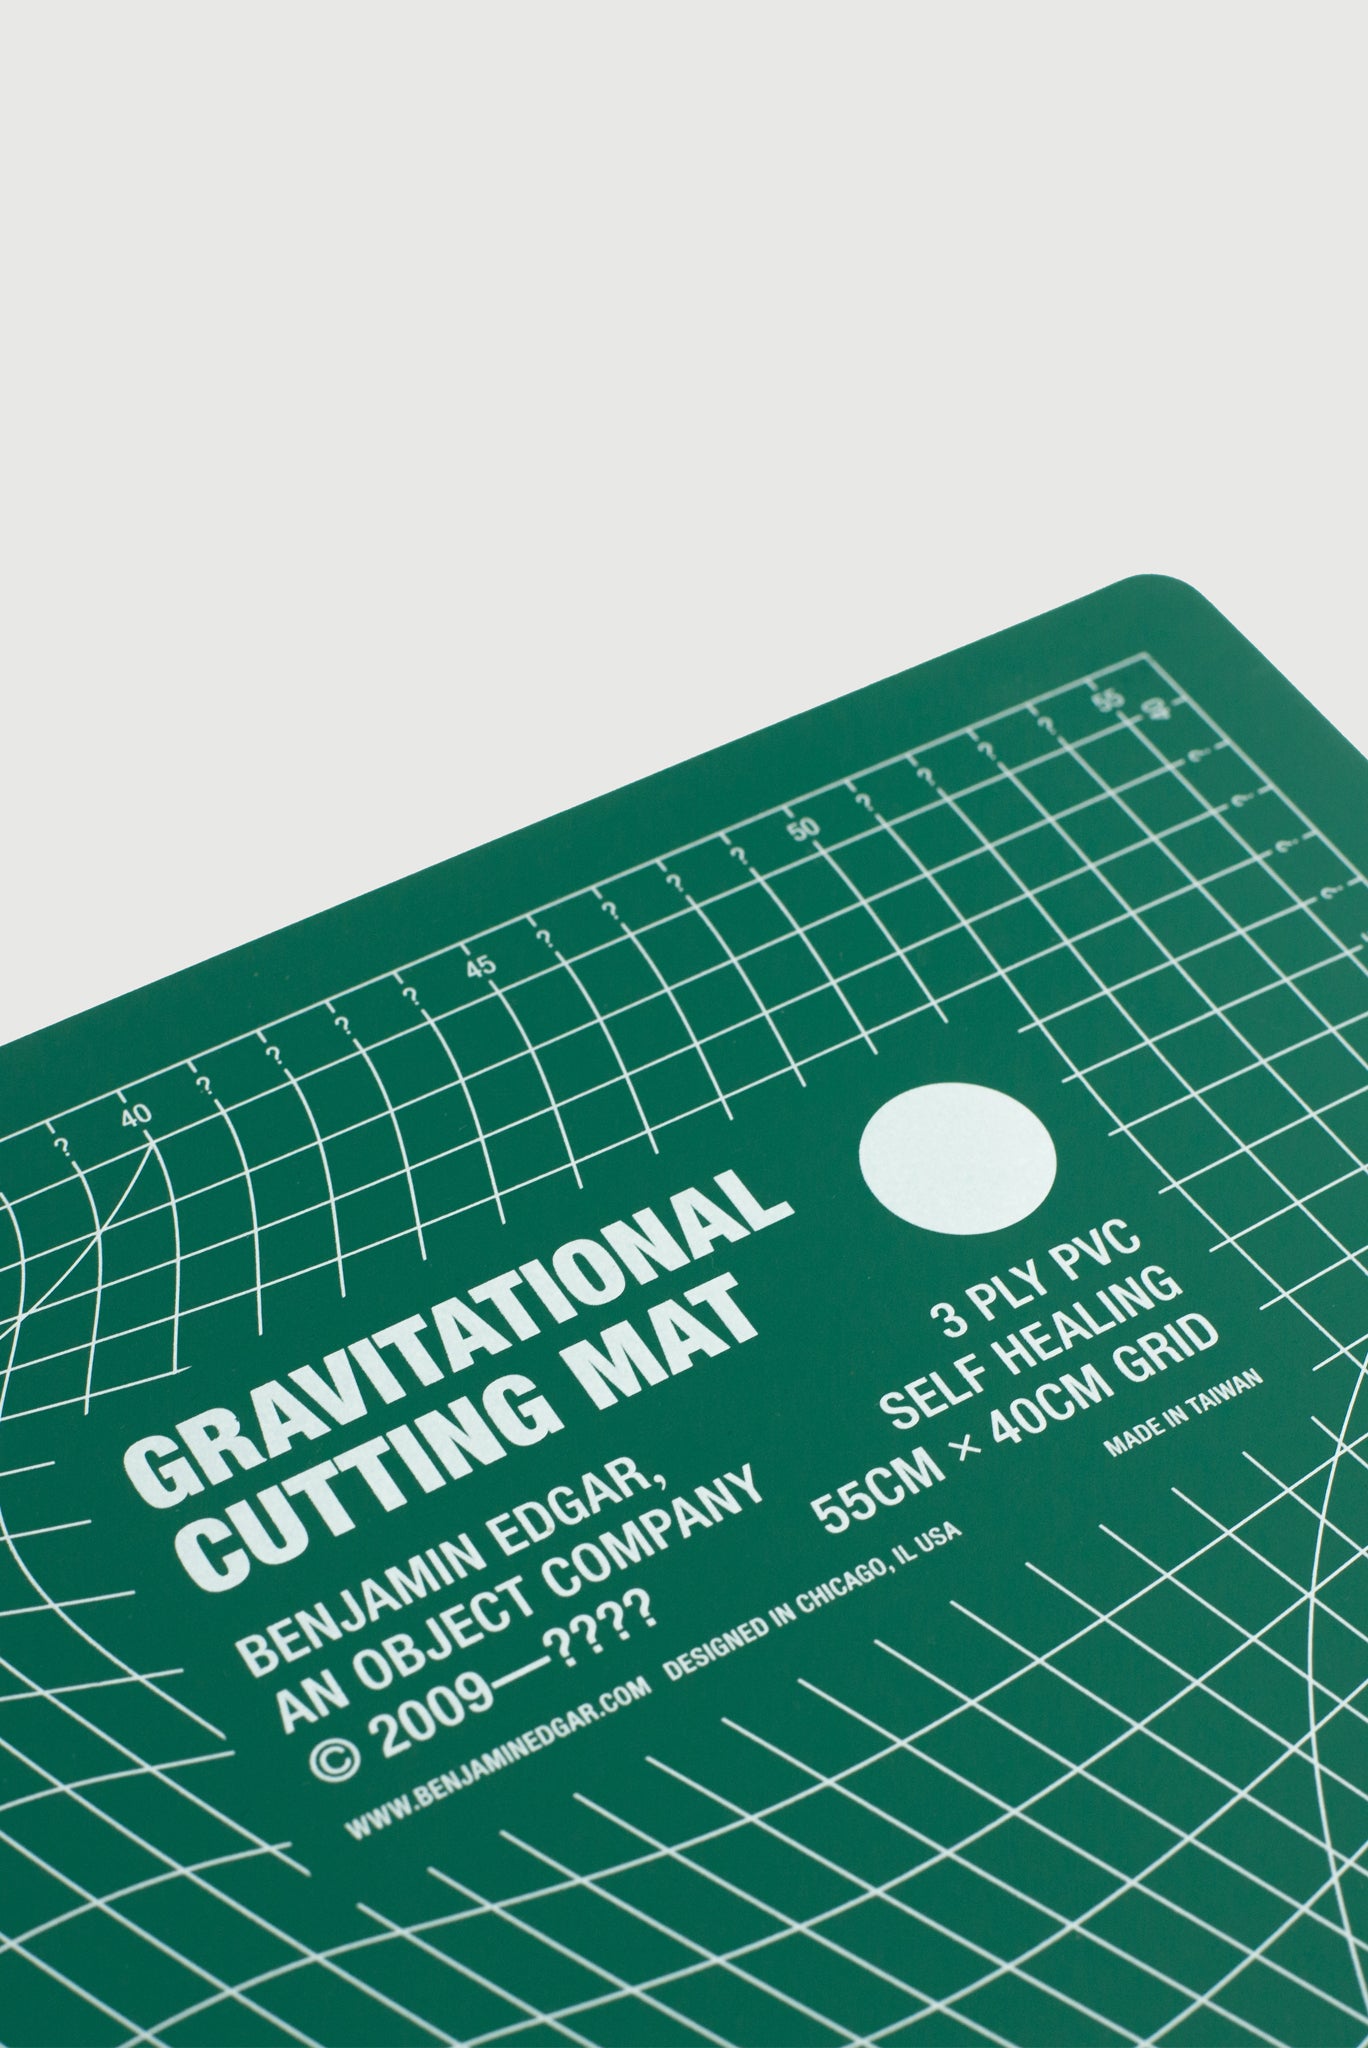 Gravitational Cutting Mat – BENJAMIN EDGAR, object company.